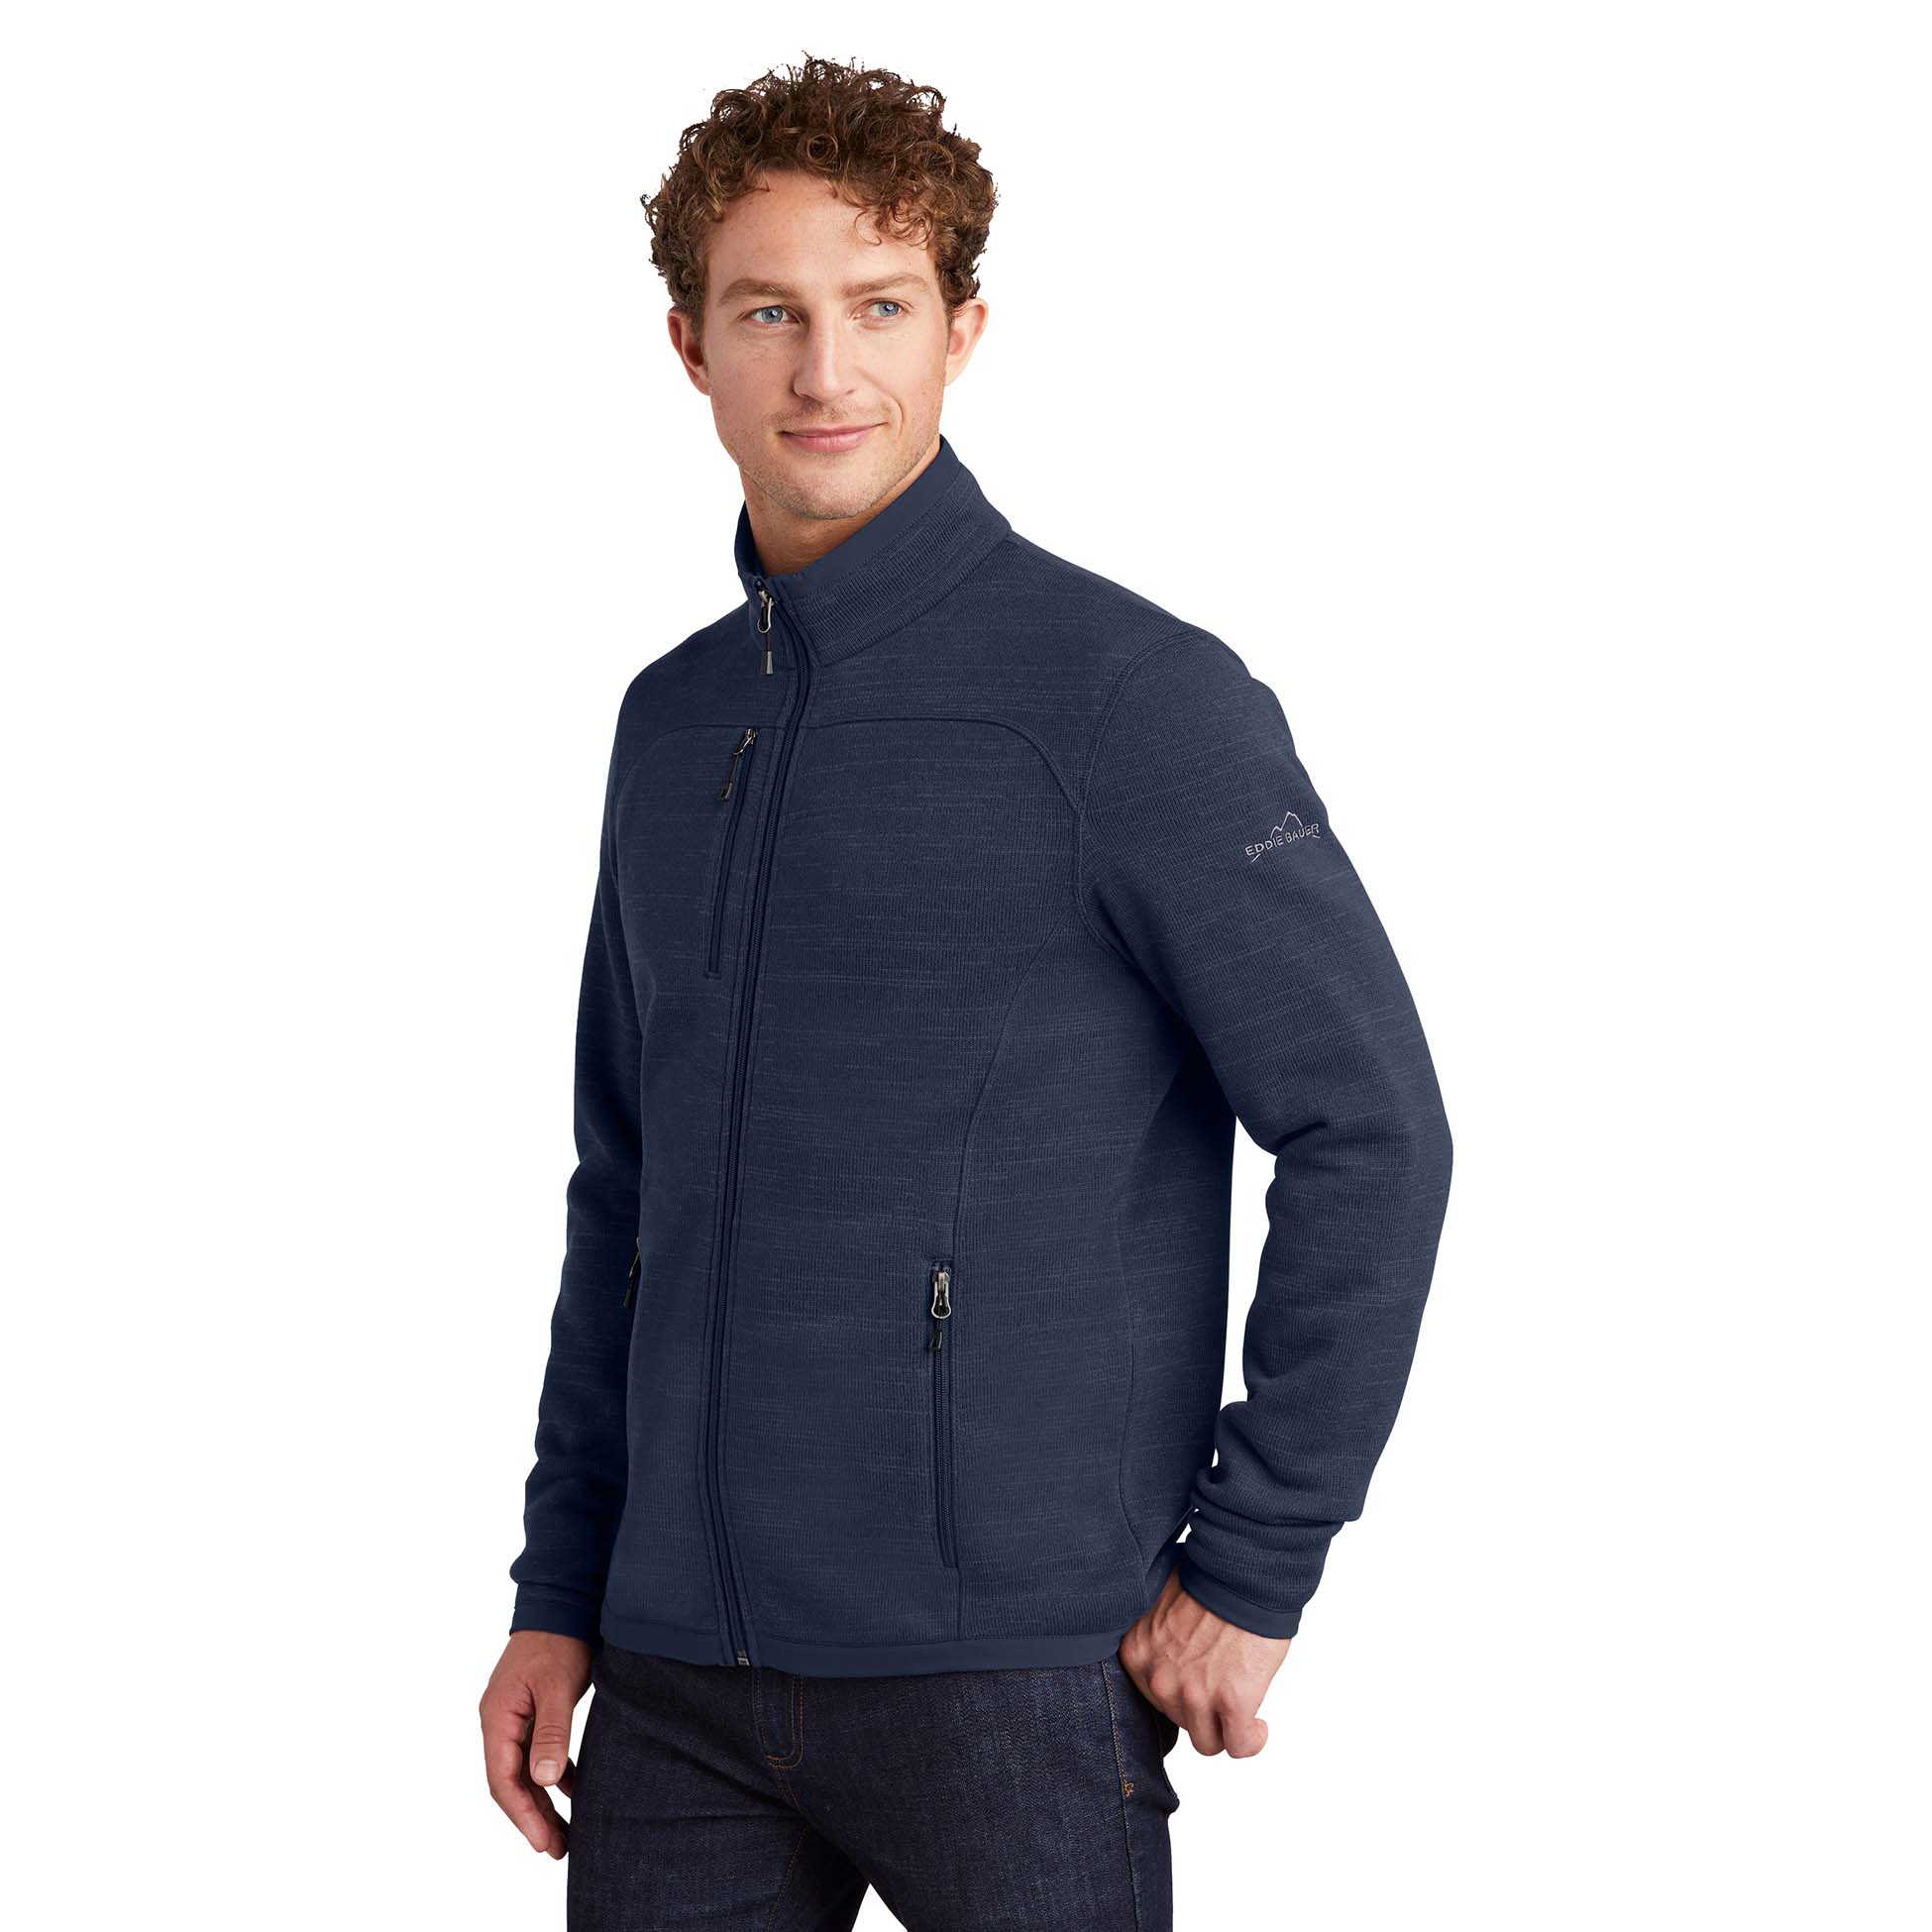 Eddie Bauer EB250 Sweater Fleece Full-Zip - River Blue Heather | Full ...